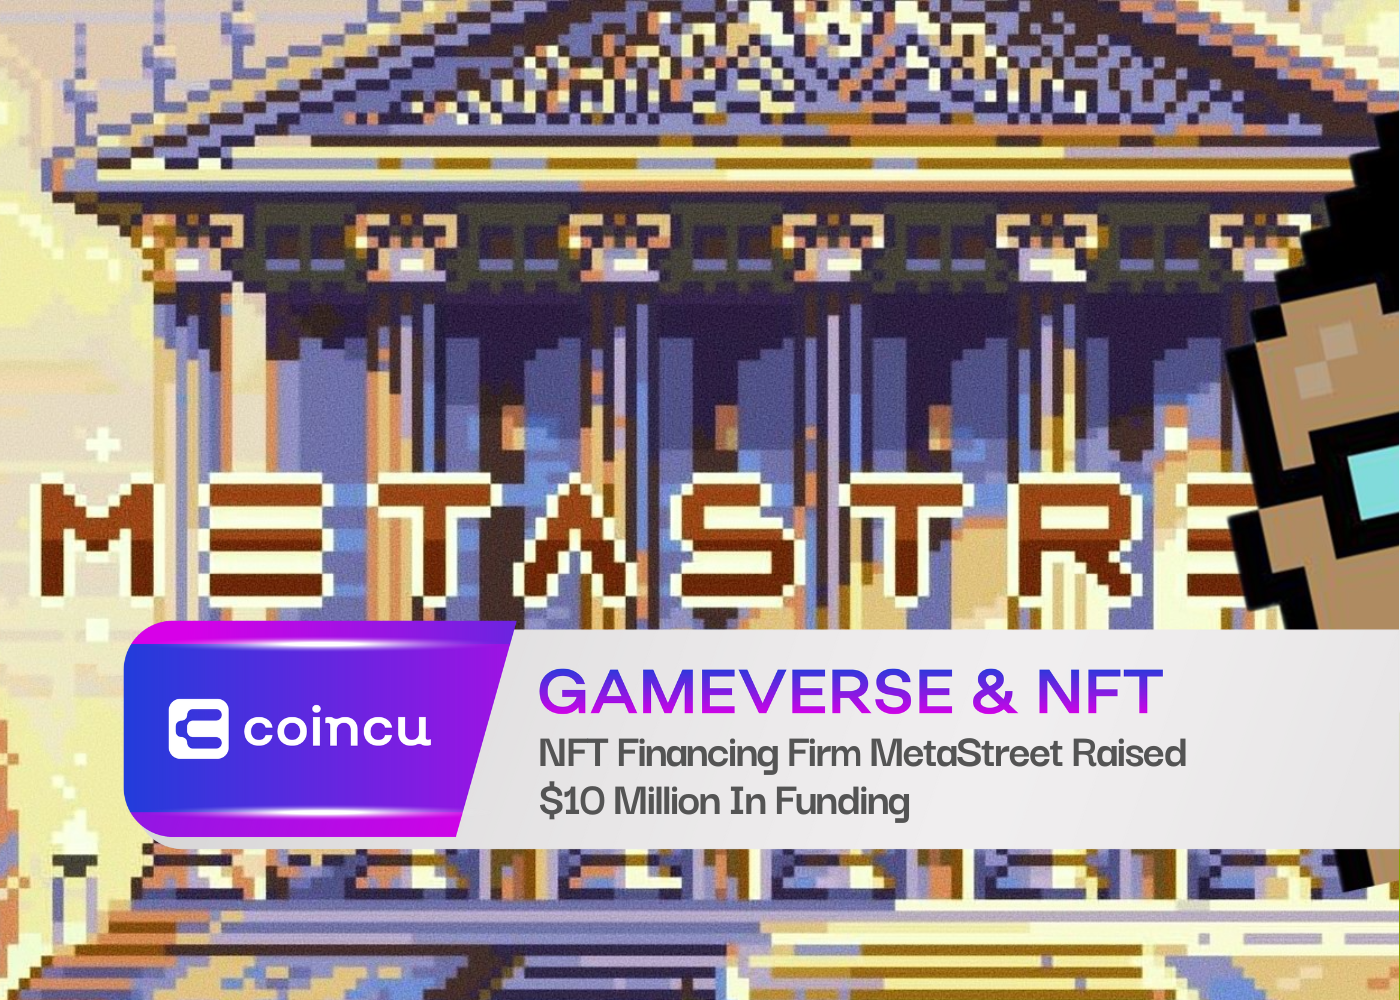 NFT Financing Firm MetaStreet Raised $10 Million In Funding